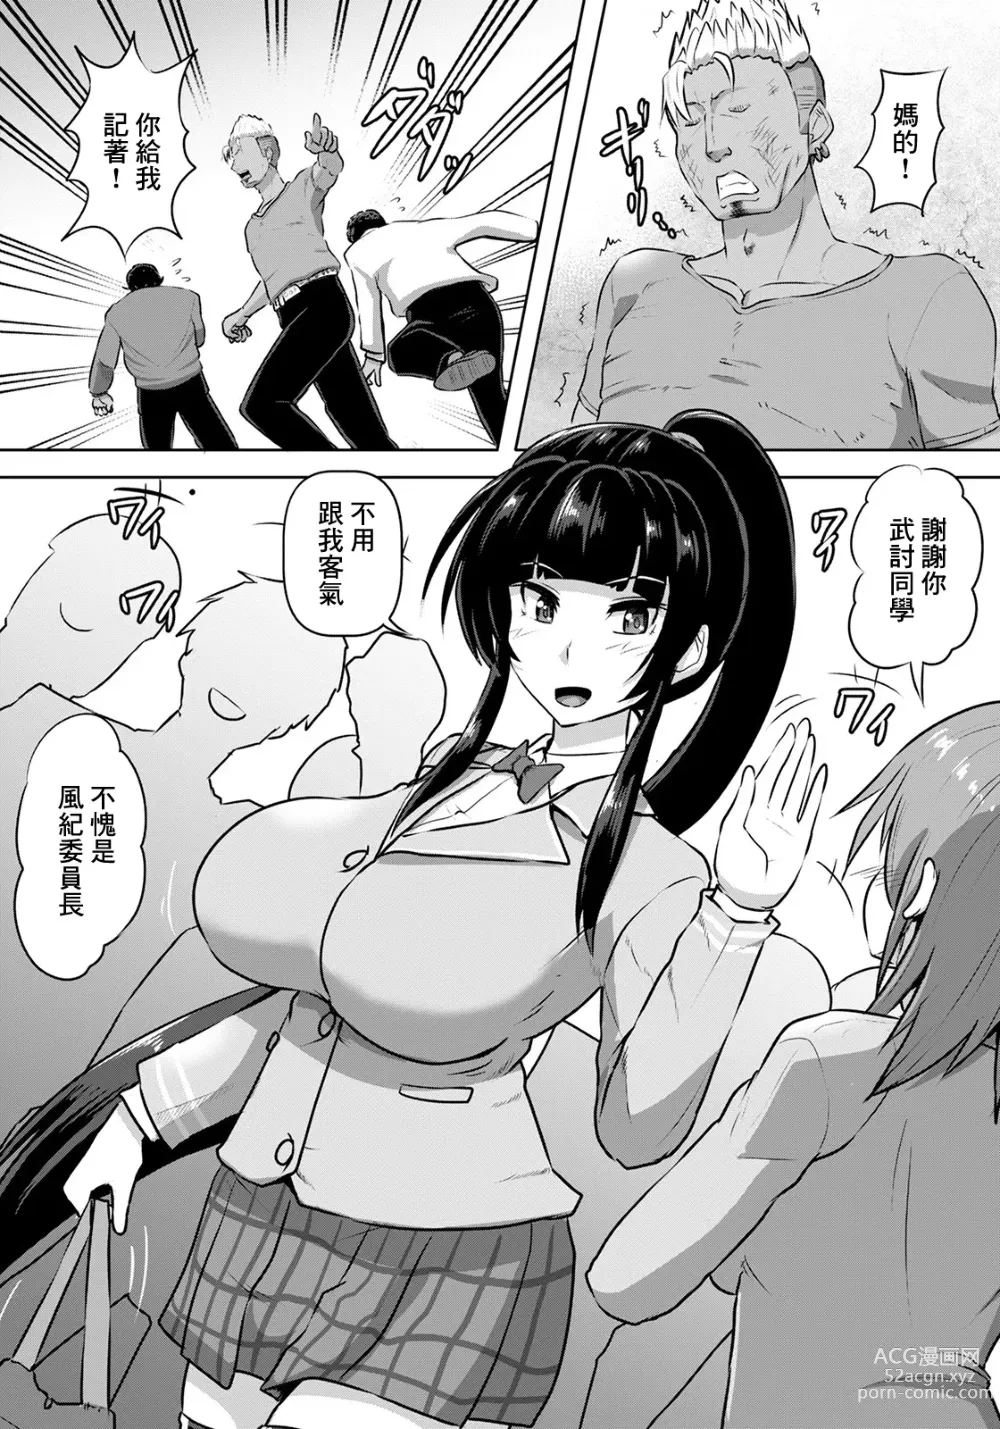 Page 2 of manga Kakutou  JK Wakre Sex